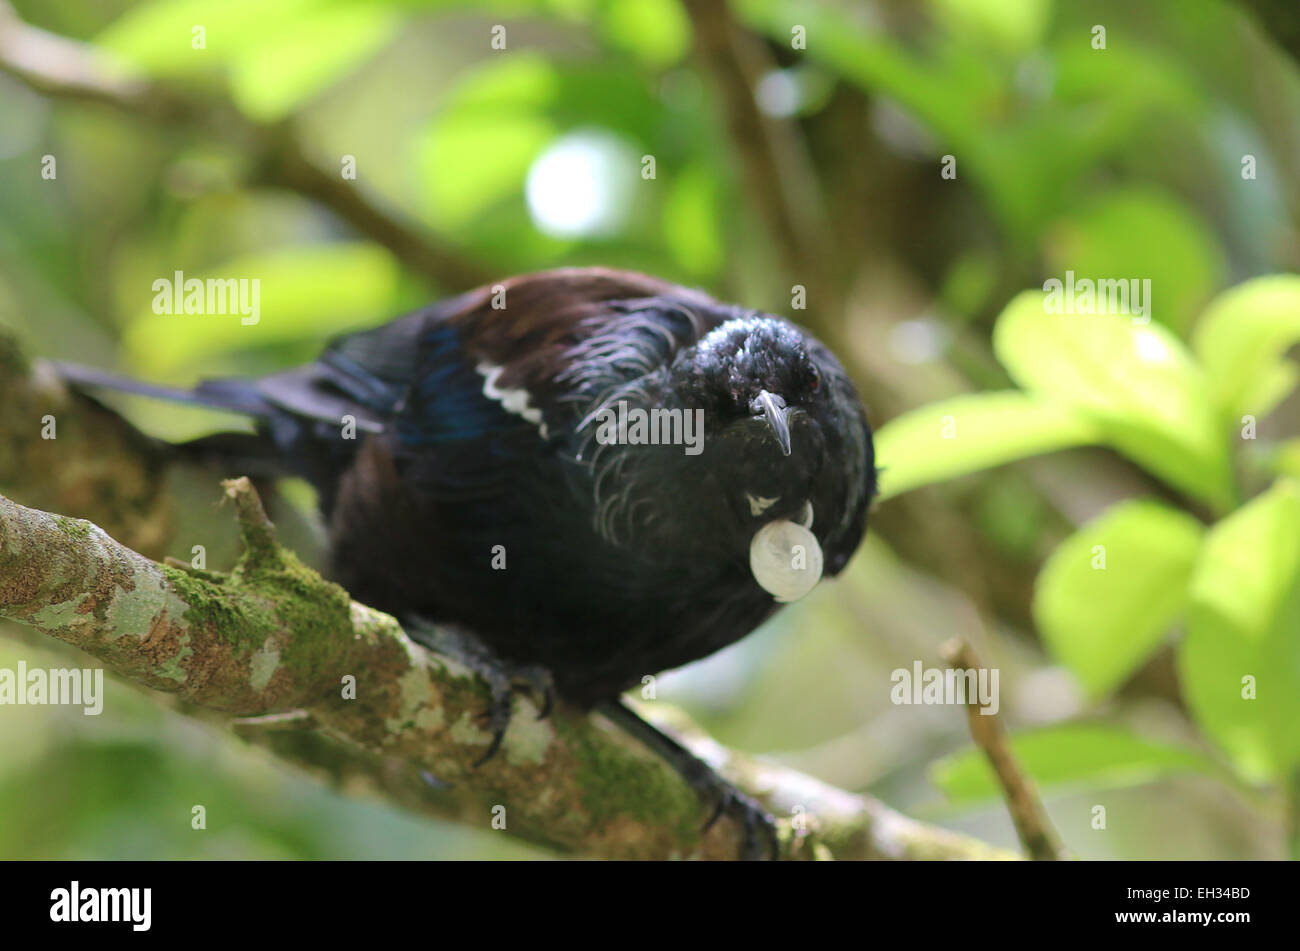 Tui bird Kapiti Island New Zealand Stock Photo